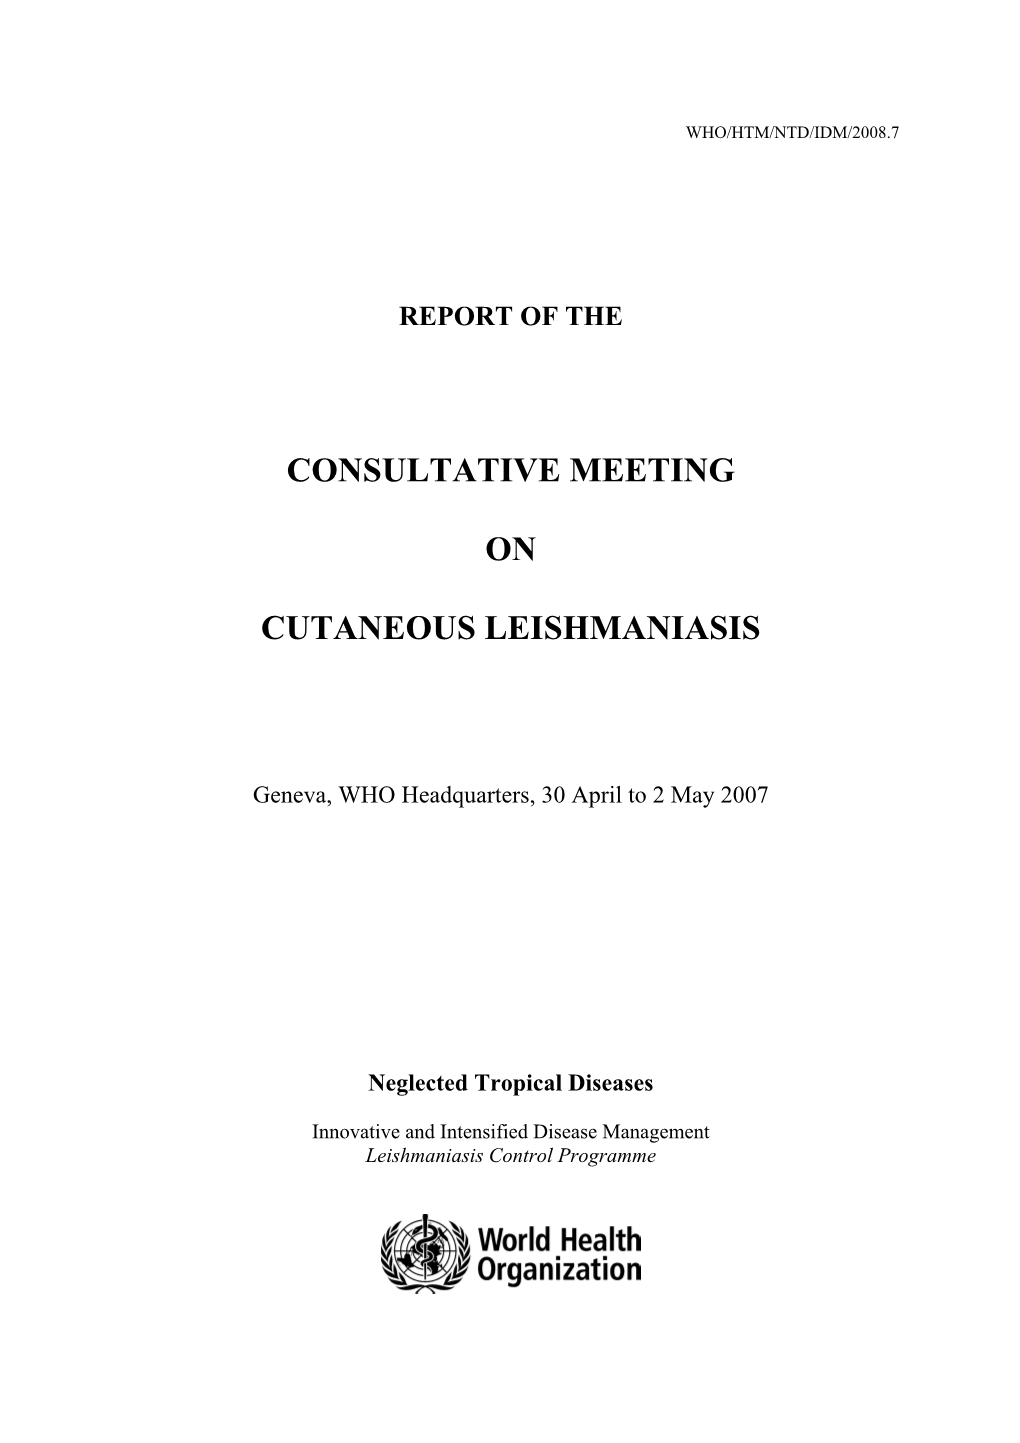 Consultative Meeting on Cutaneous Leishmaniasis